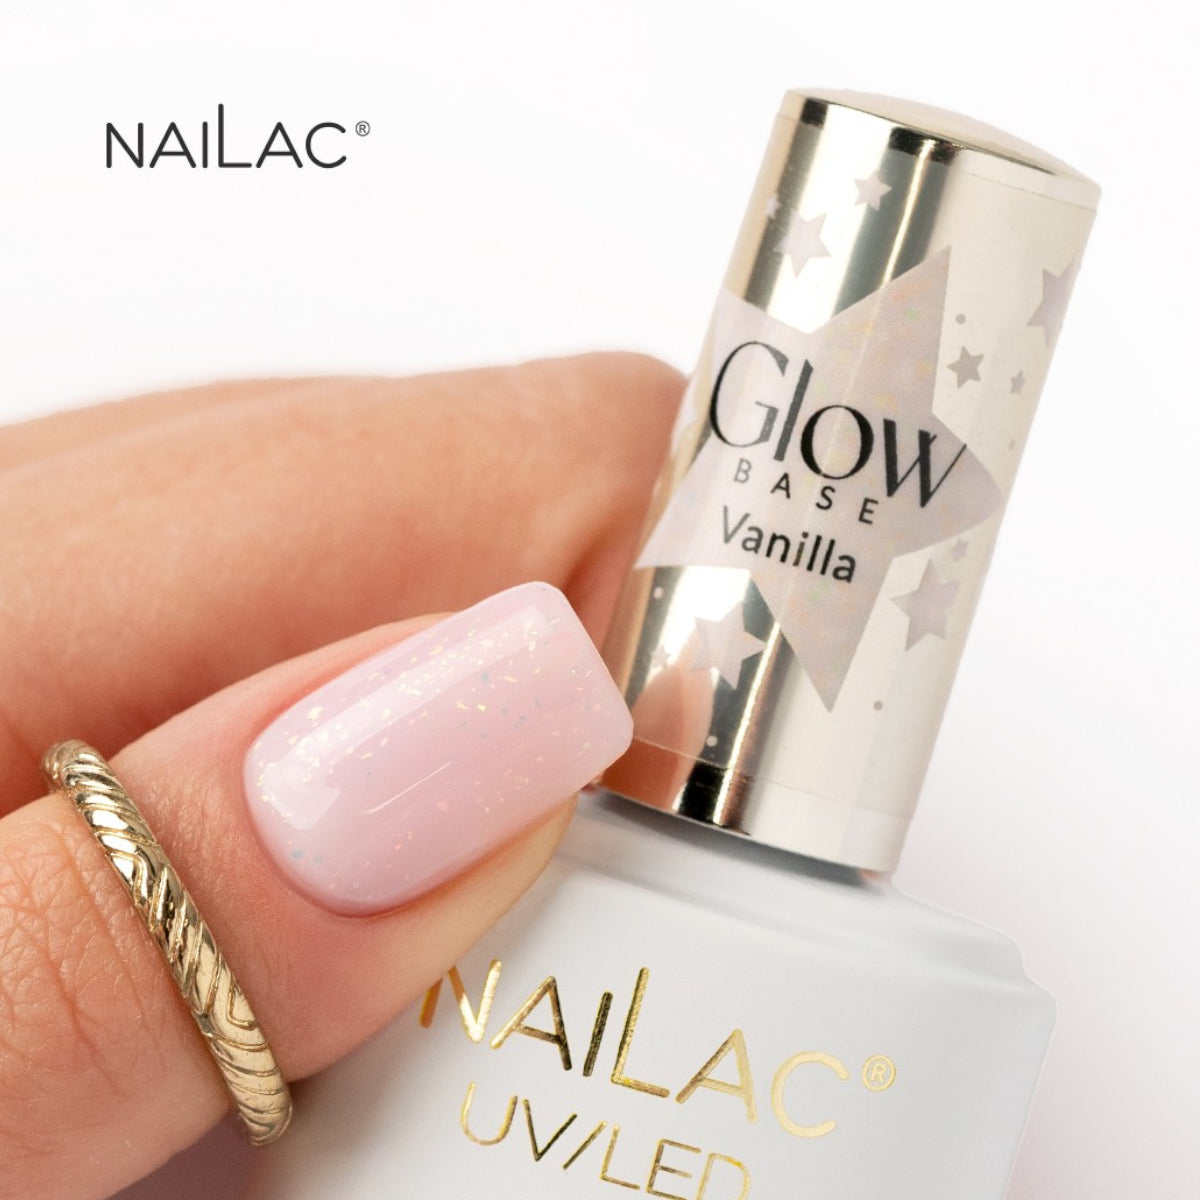 NaiLac Hybrid UV/LED Rubber Base Glow Vanilla Nail Glitter